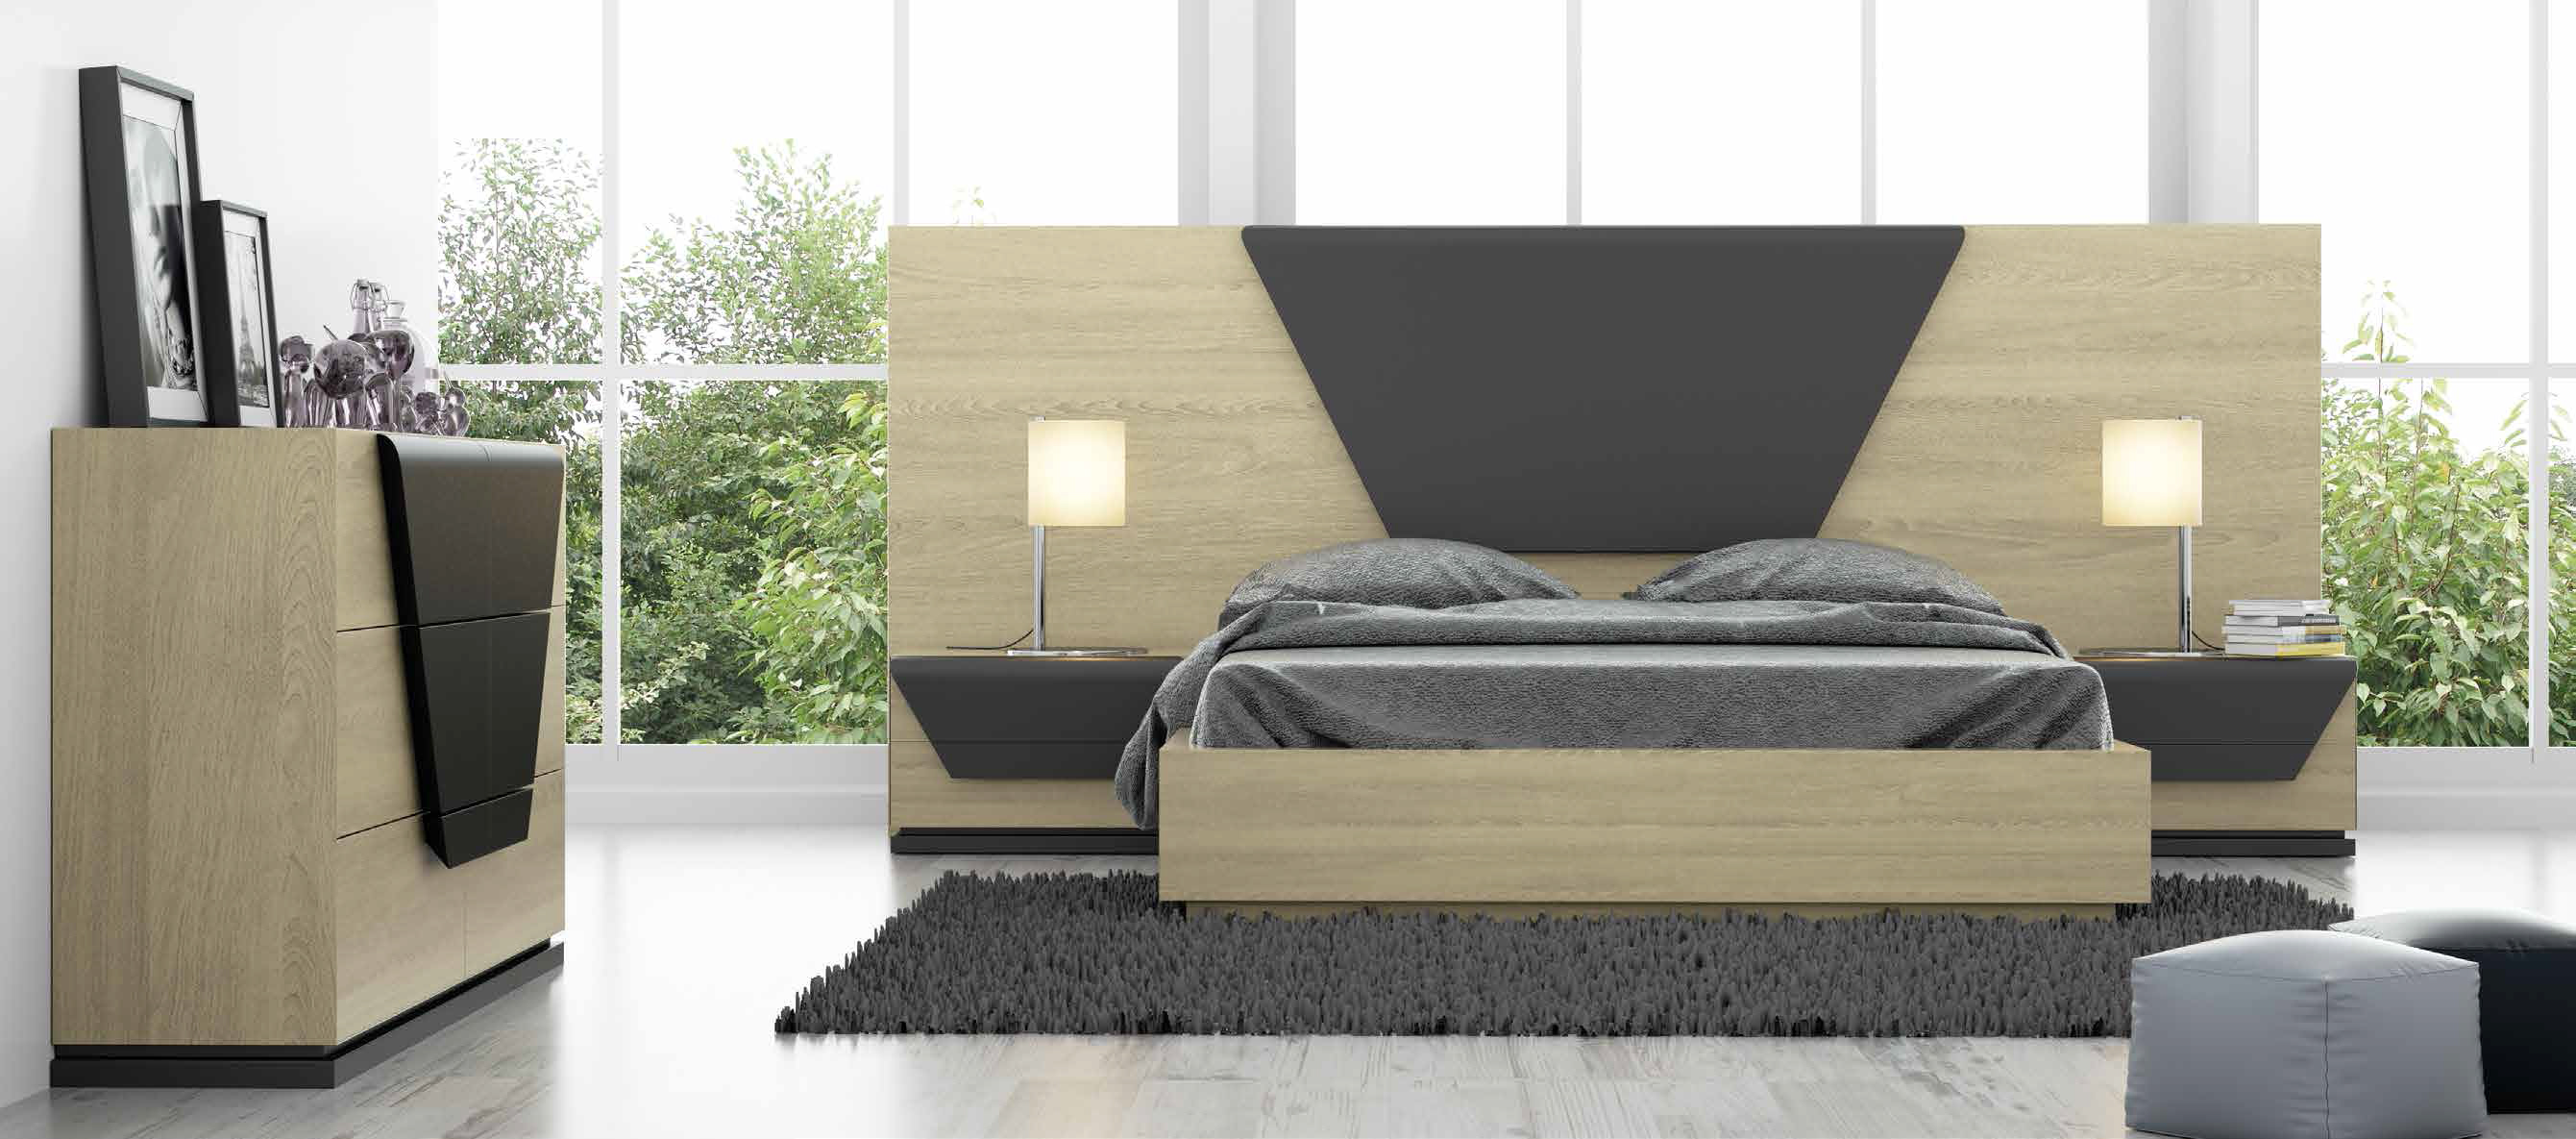 Brands Franco Furniture Bedrooms vol3, Spain DOR 85